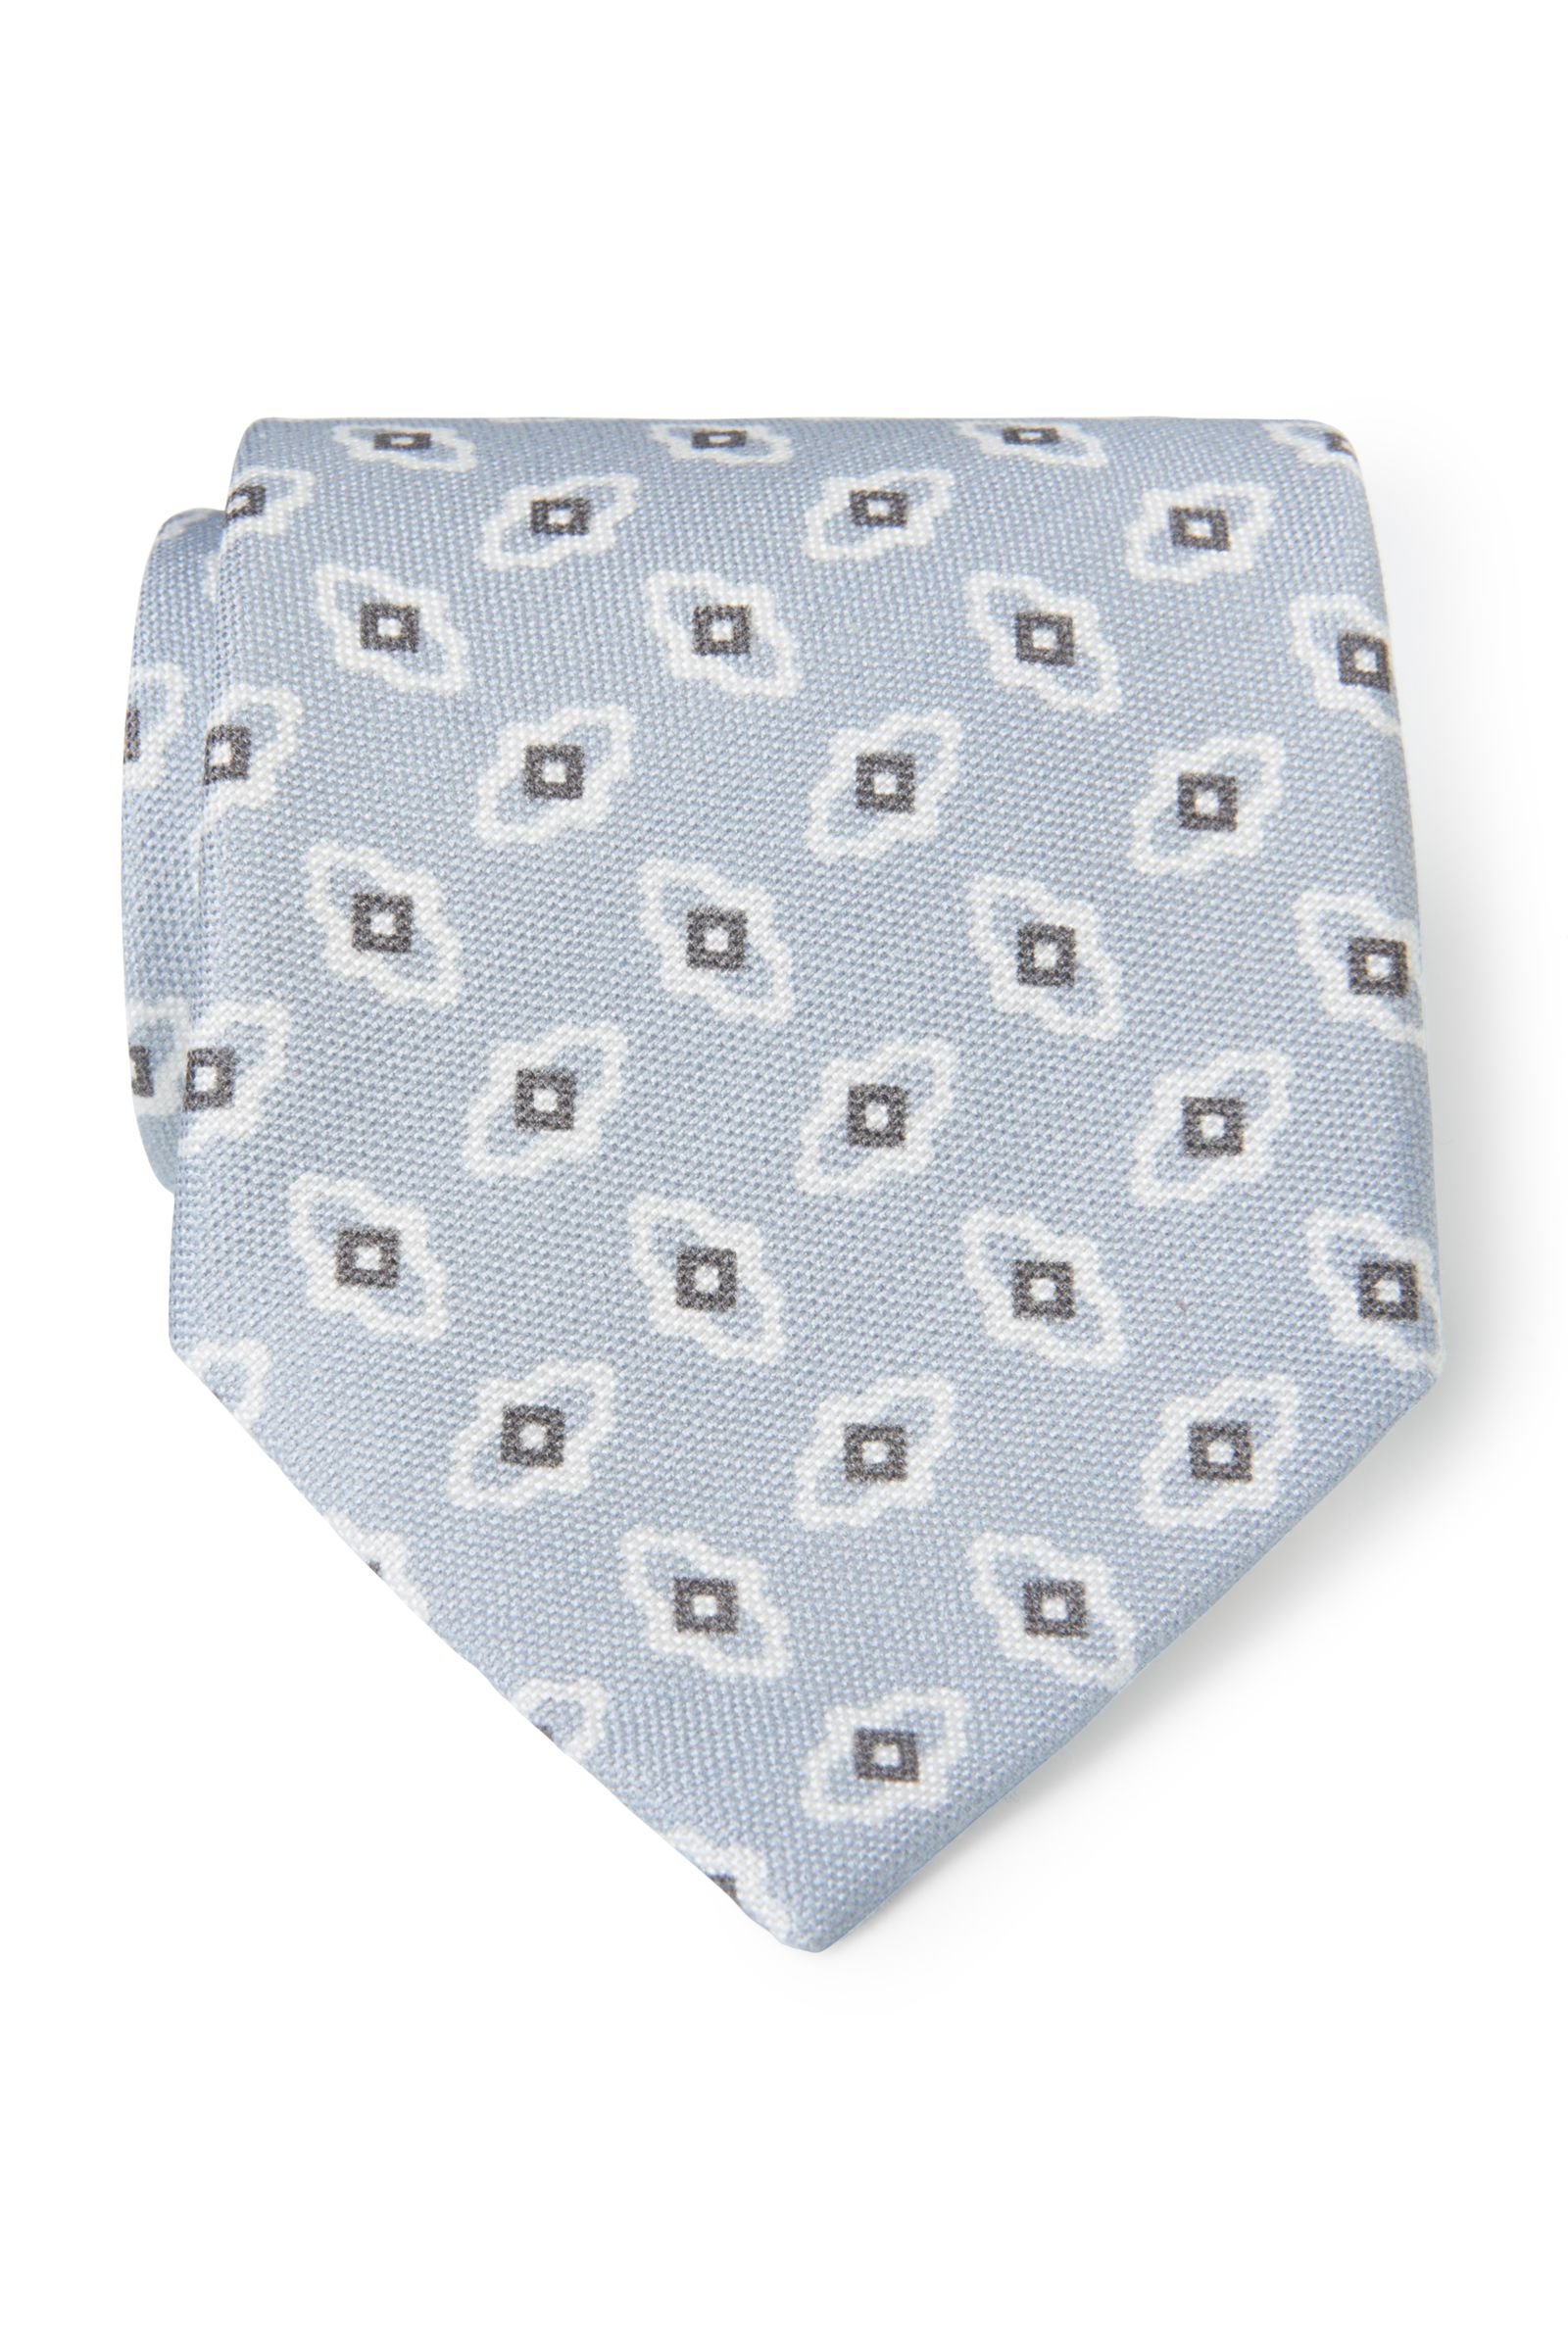 Tie light grey patterned